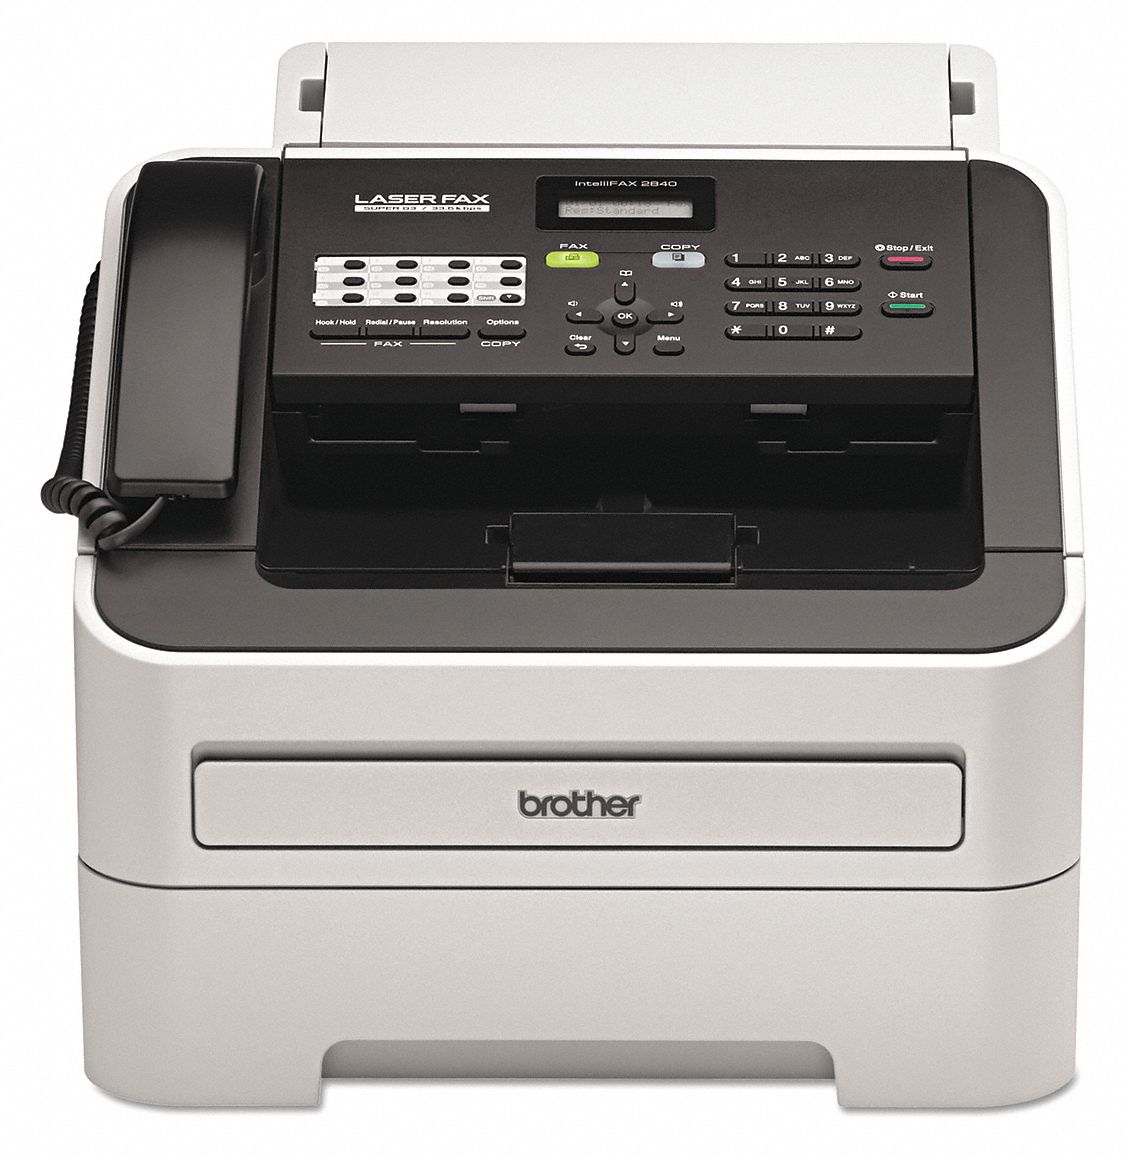 BROTHER, Copier/Fax/Printer, Black/White, Laser Printer - 38LV09|BRTFAX2840 -